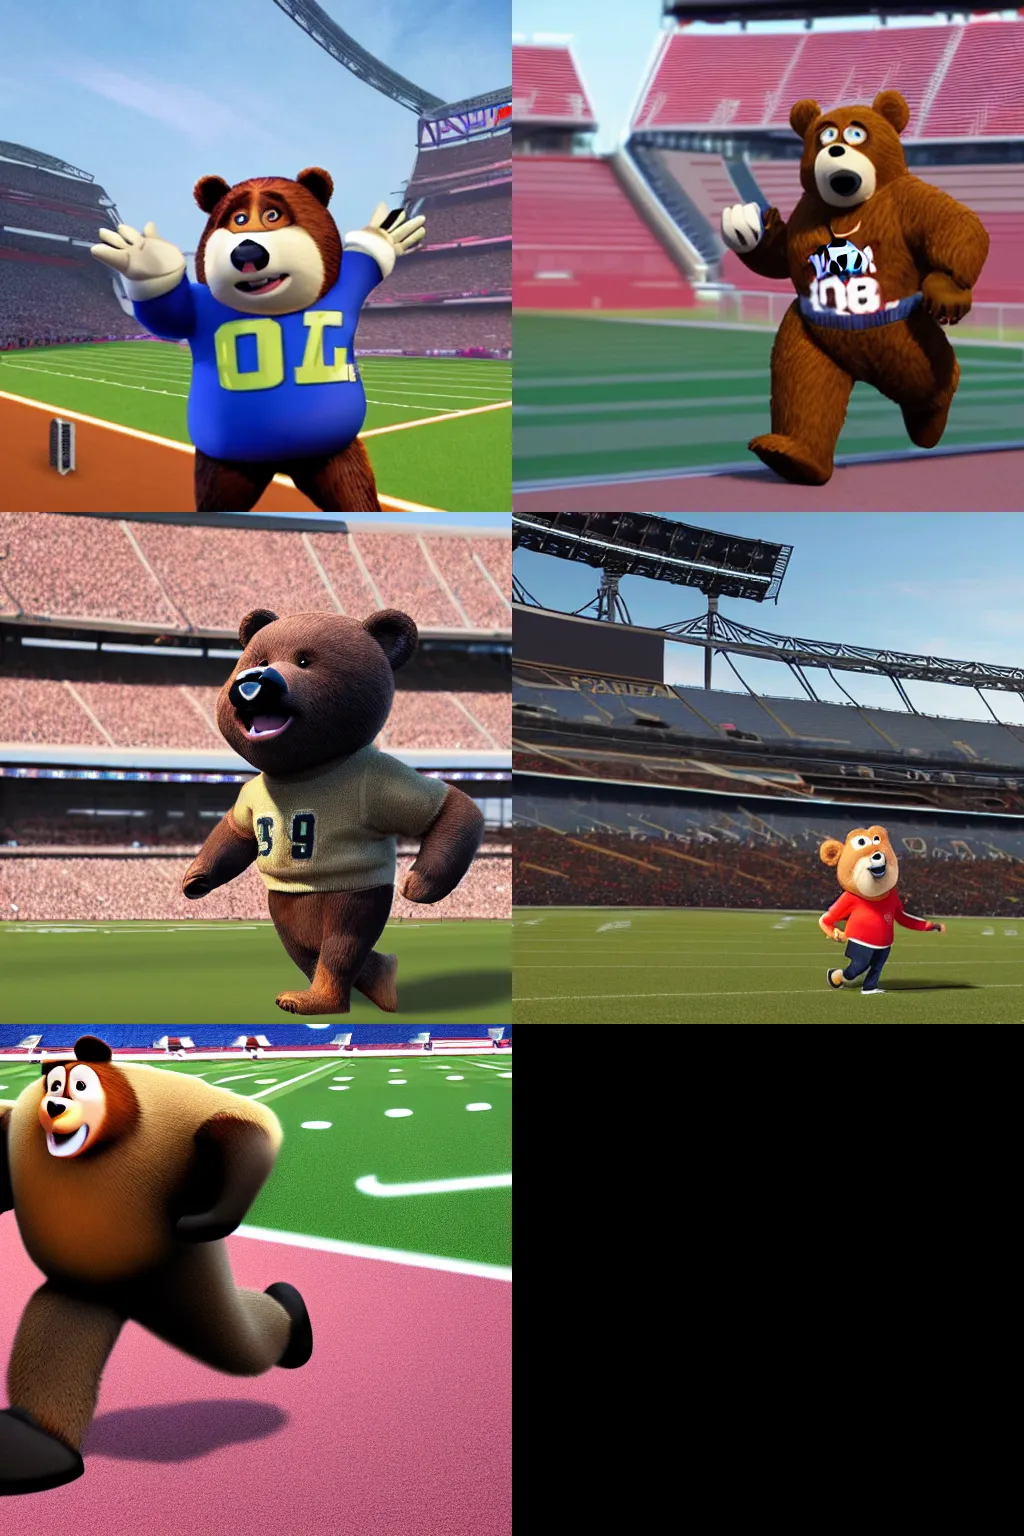 Prompt: bear sportsman Pixar character running on the stadium